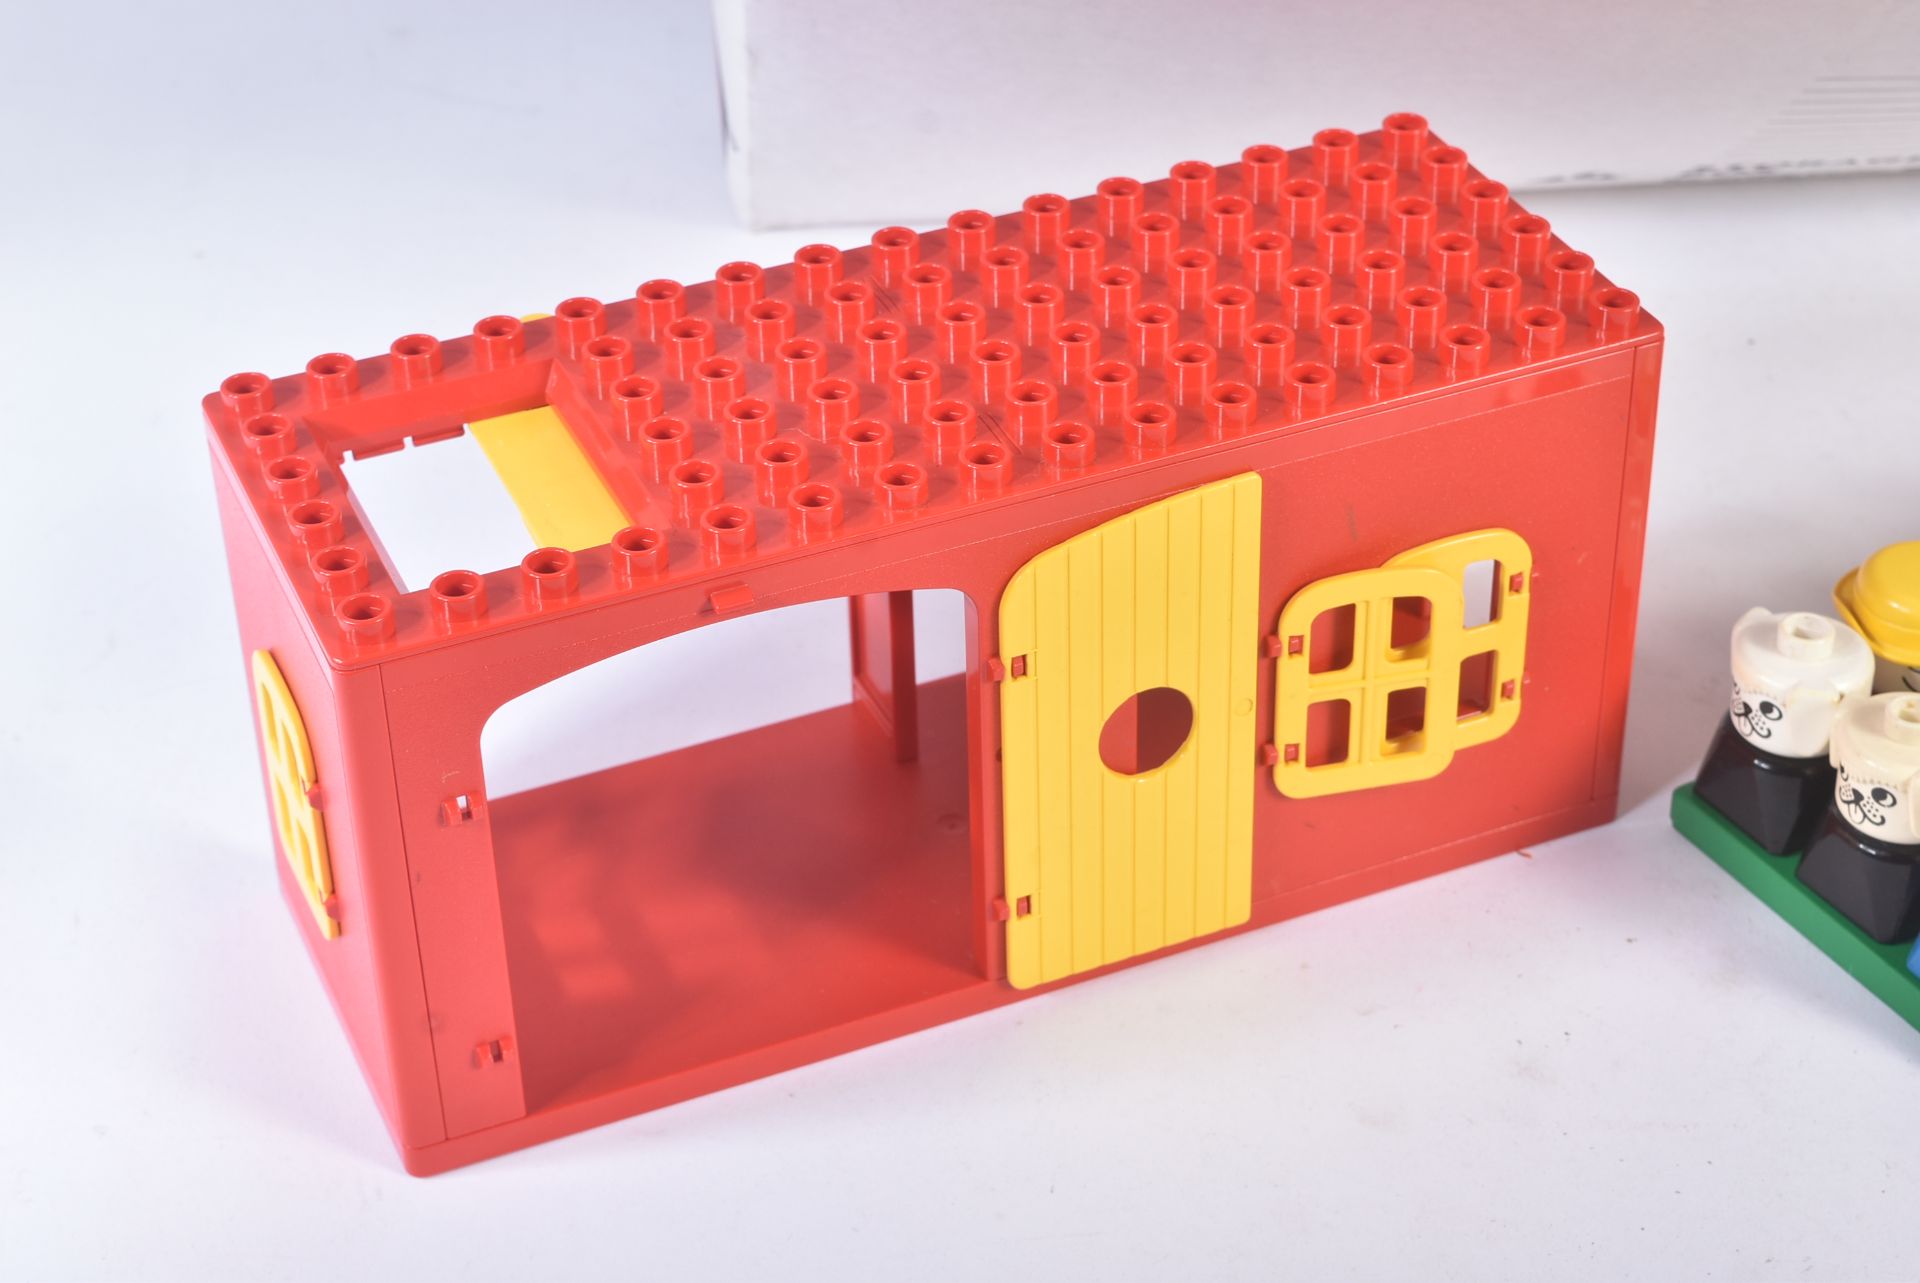 COLLECTION OF VINTAGE LEGO DUPLO BUILDING BRICKS - Image 3 of 7